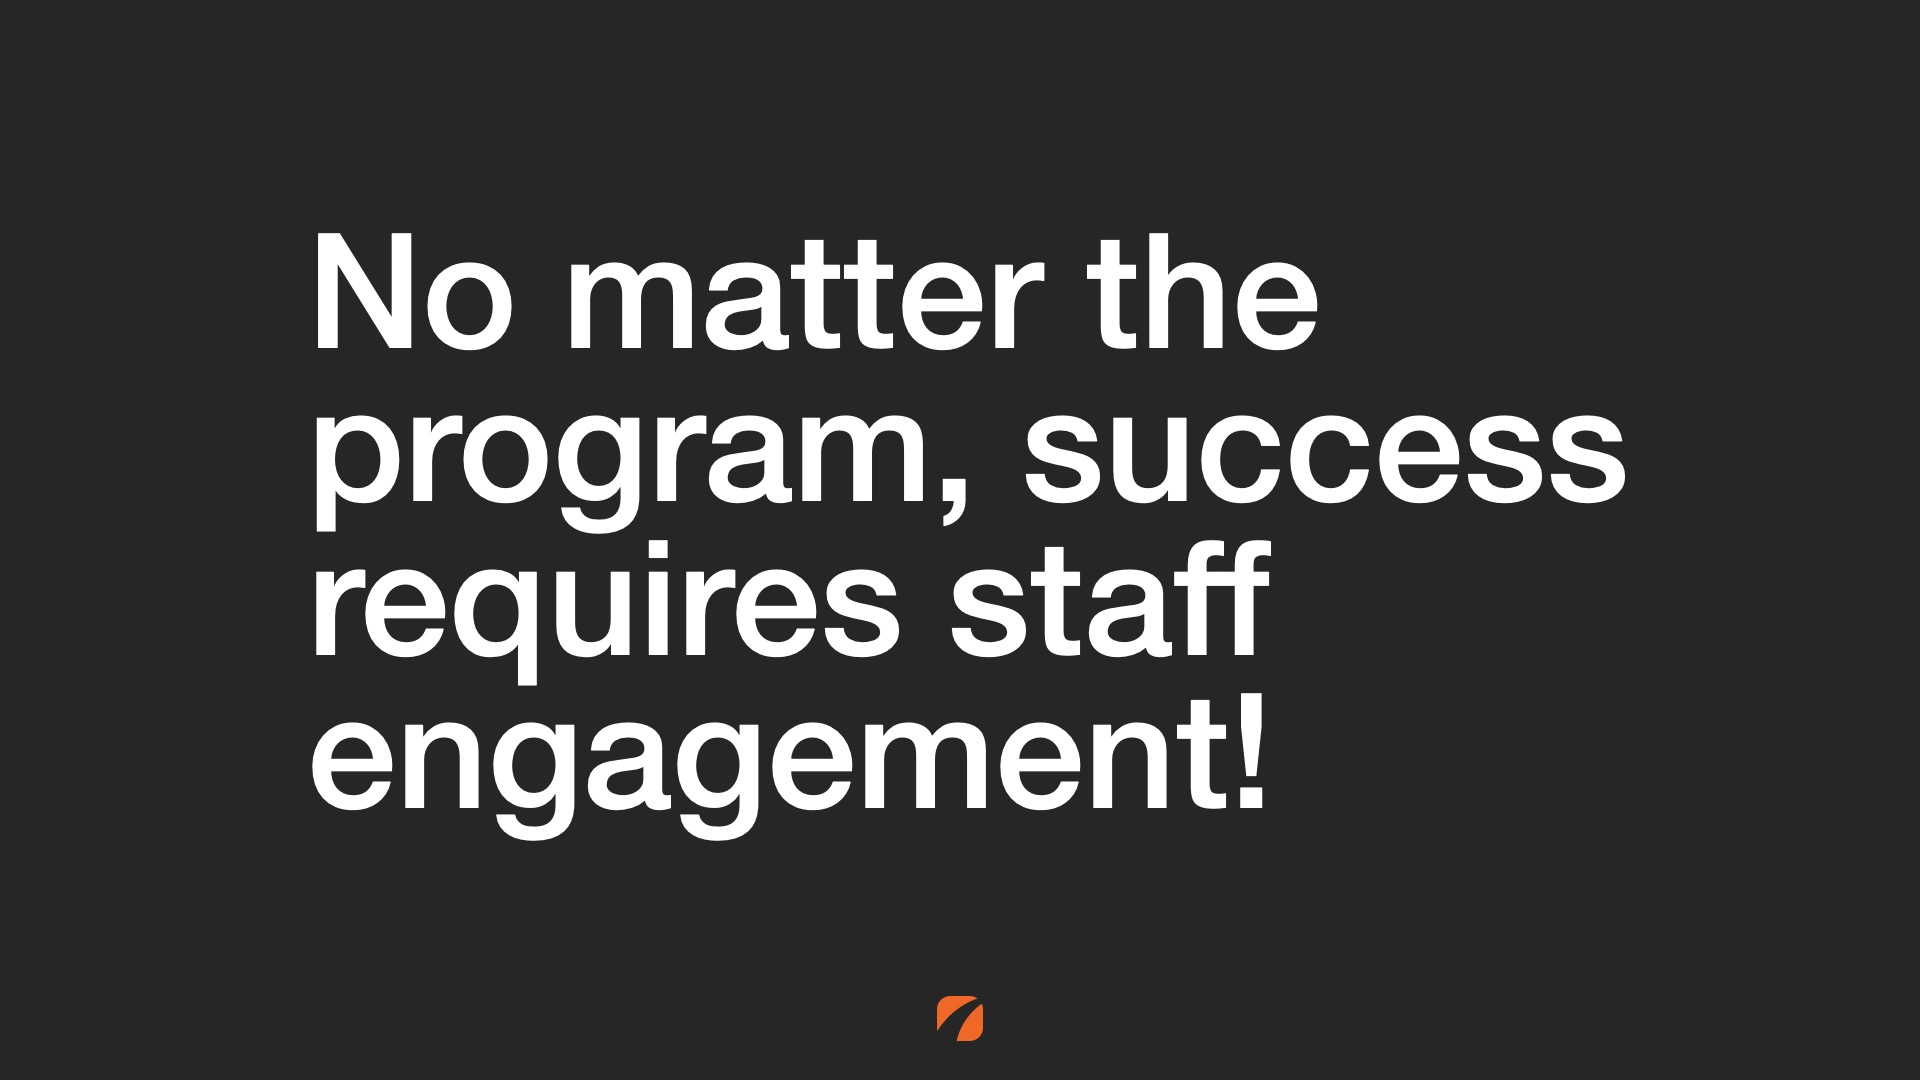 Staff engagement